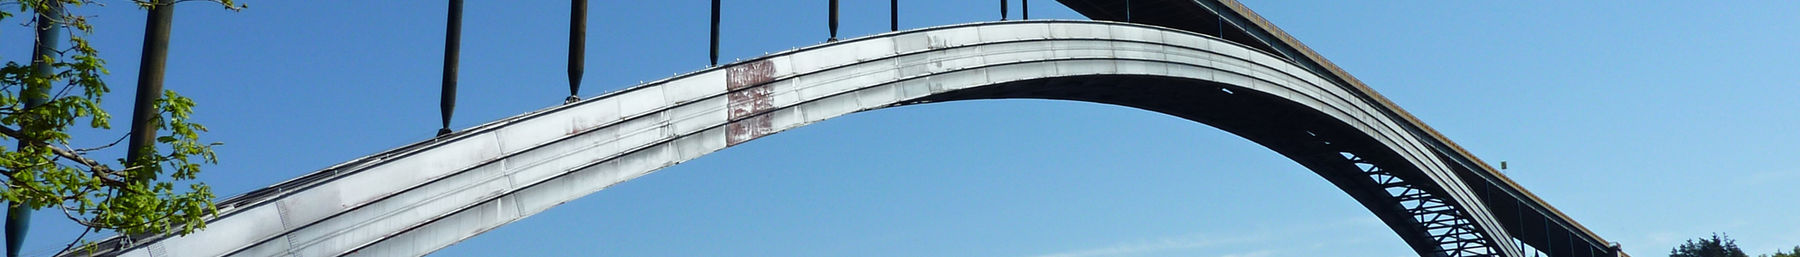 Южна Бохемия банер Жоков мост.jpg